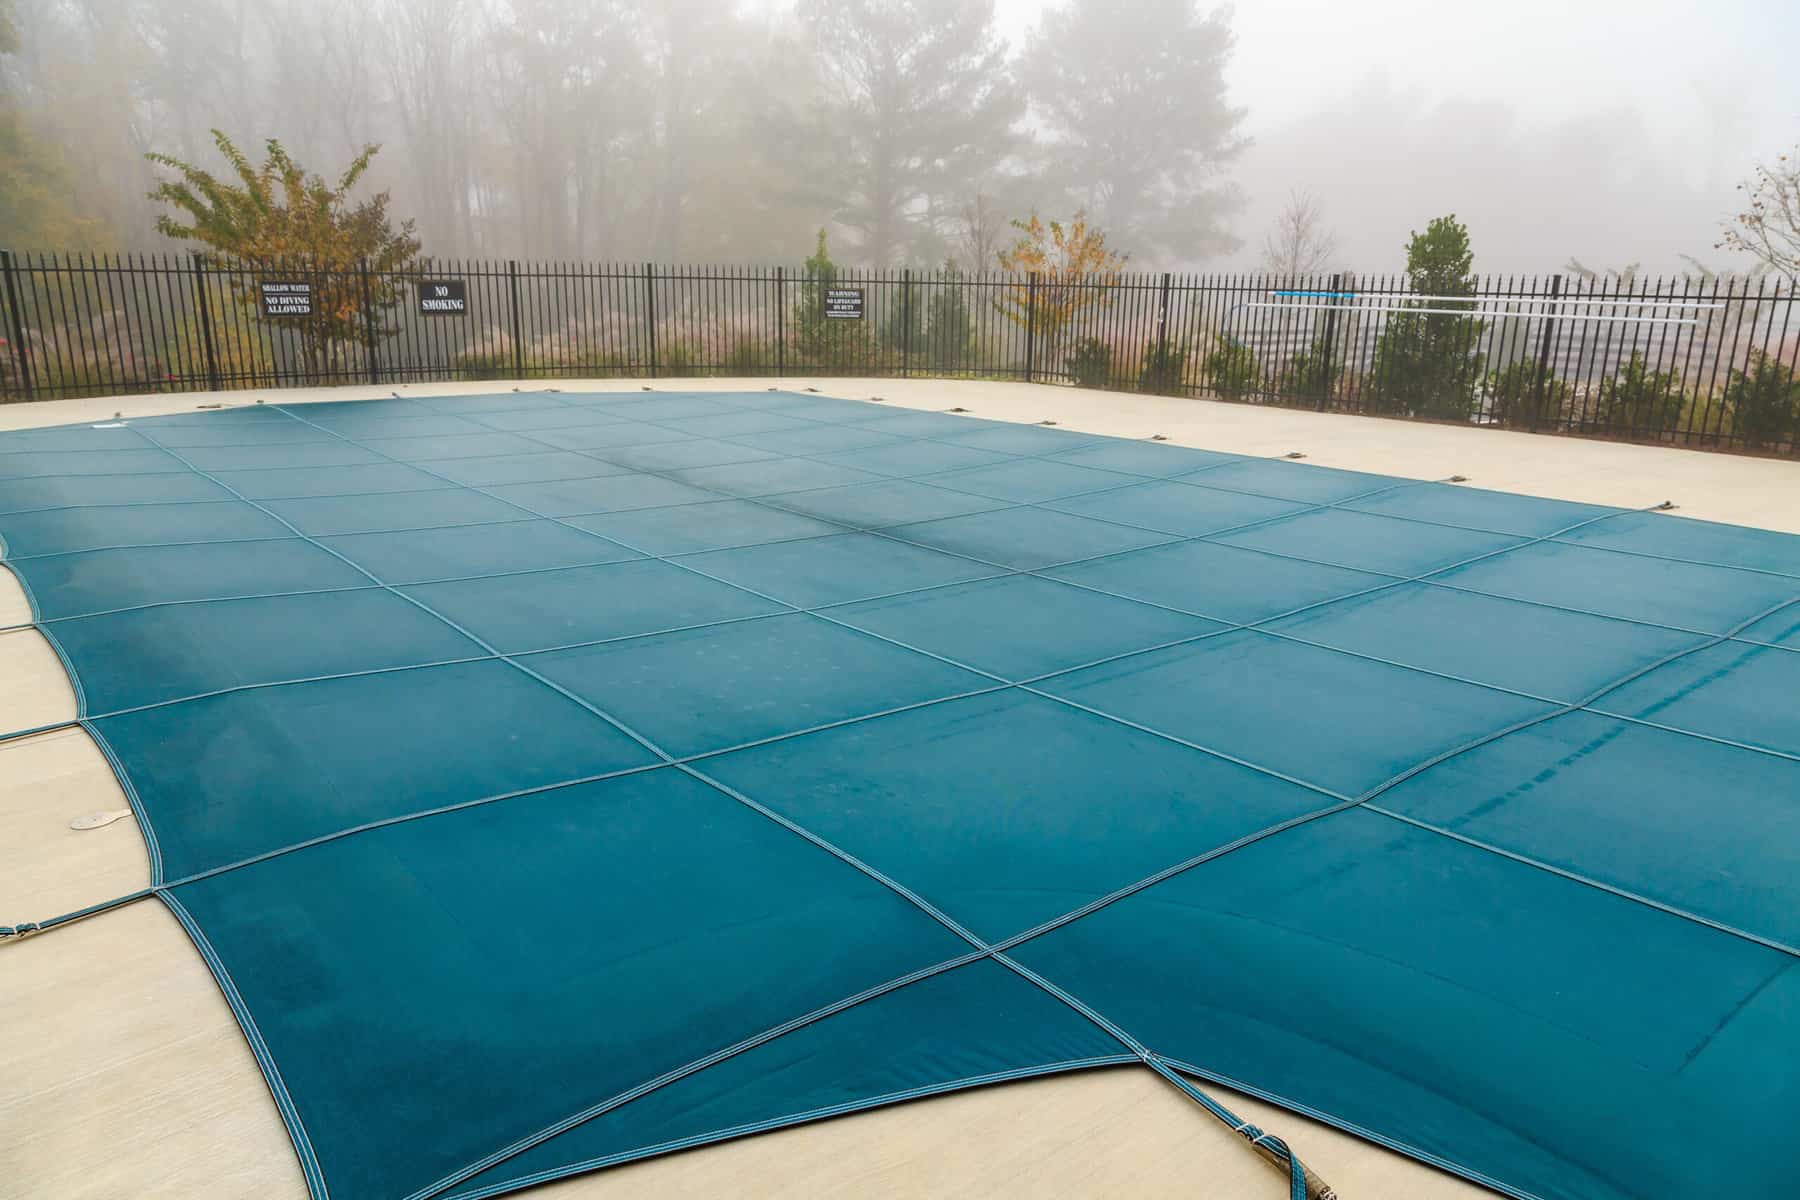 A Blue Vinyl Pool Cover in Fog